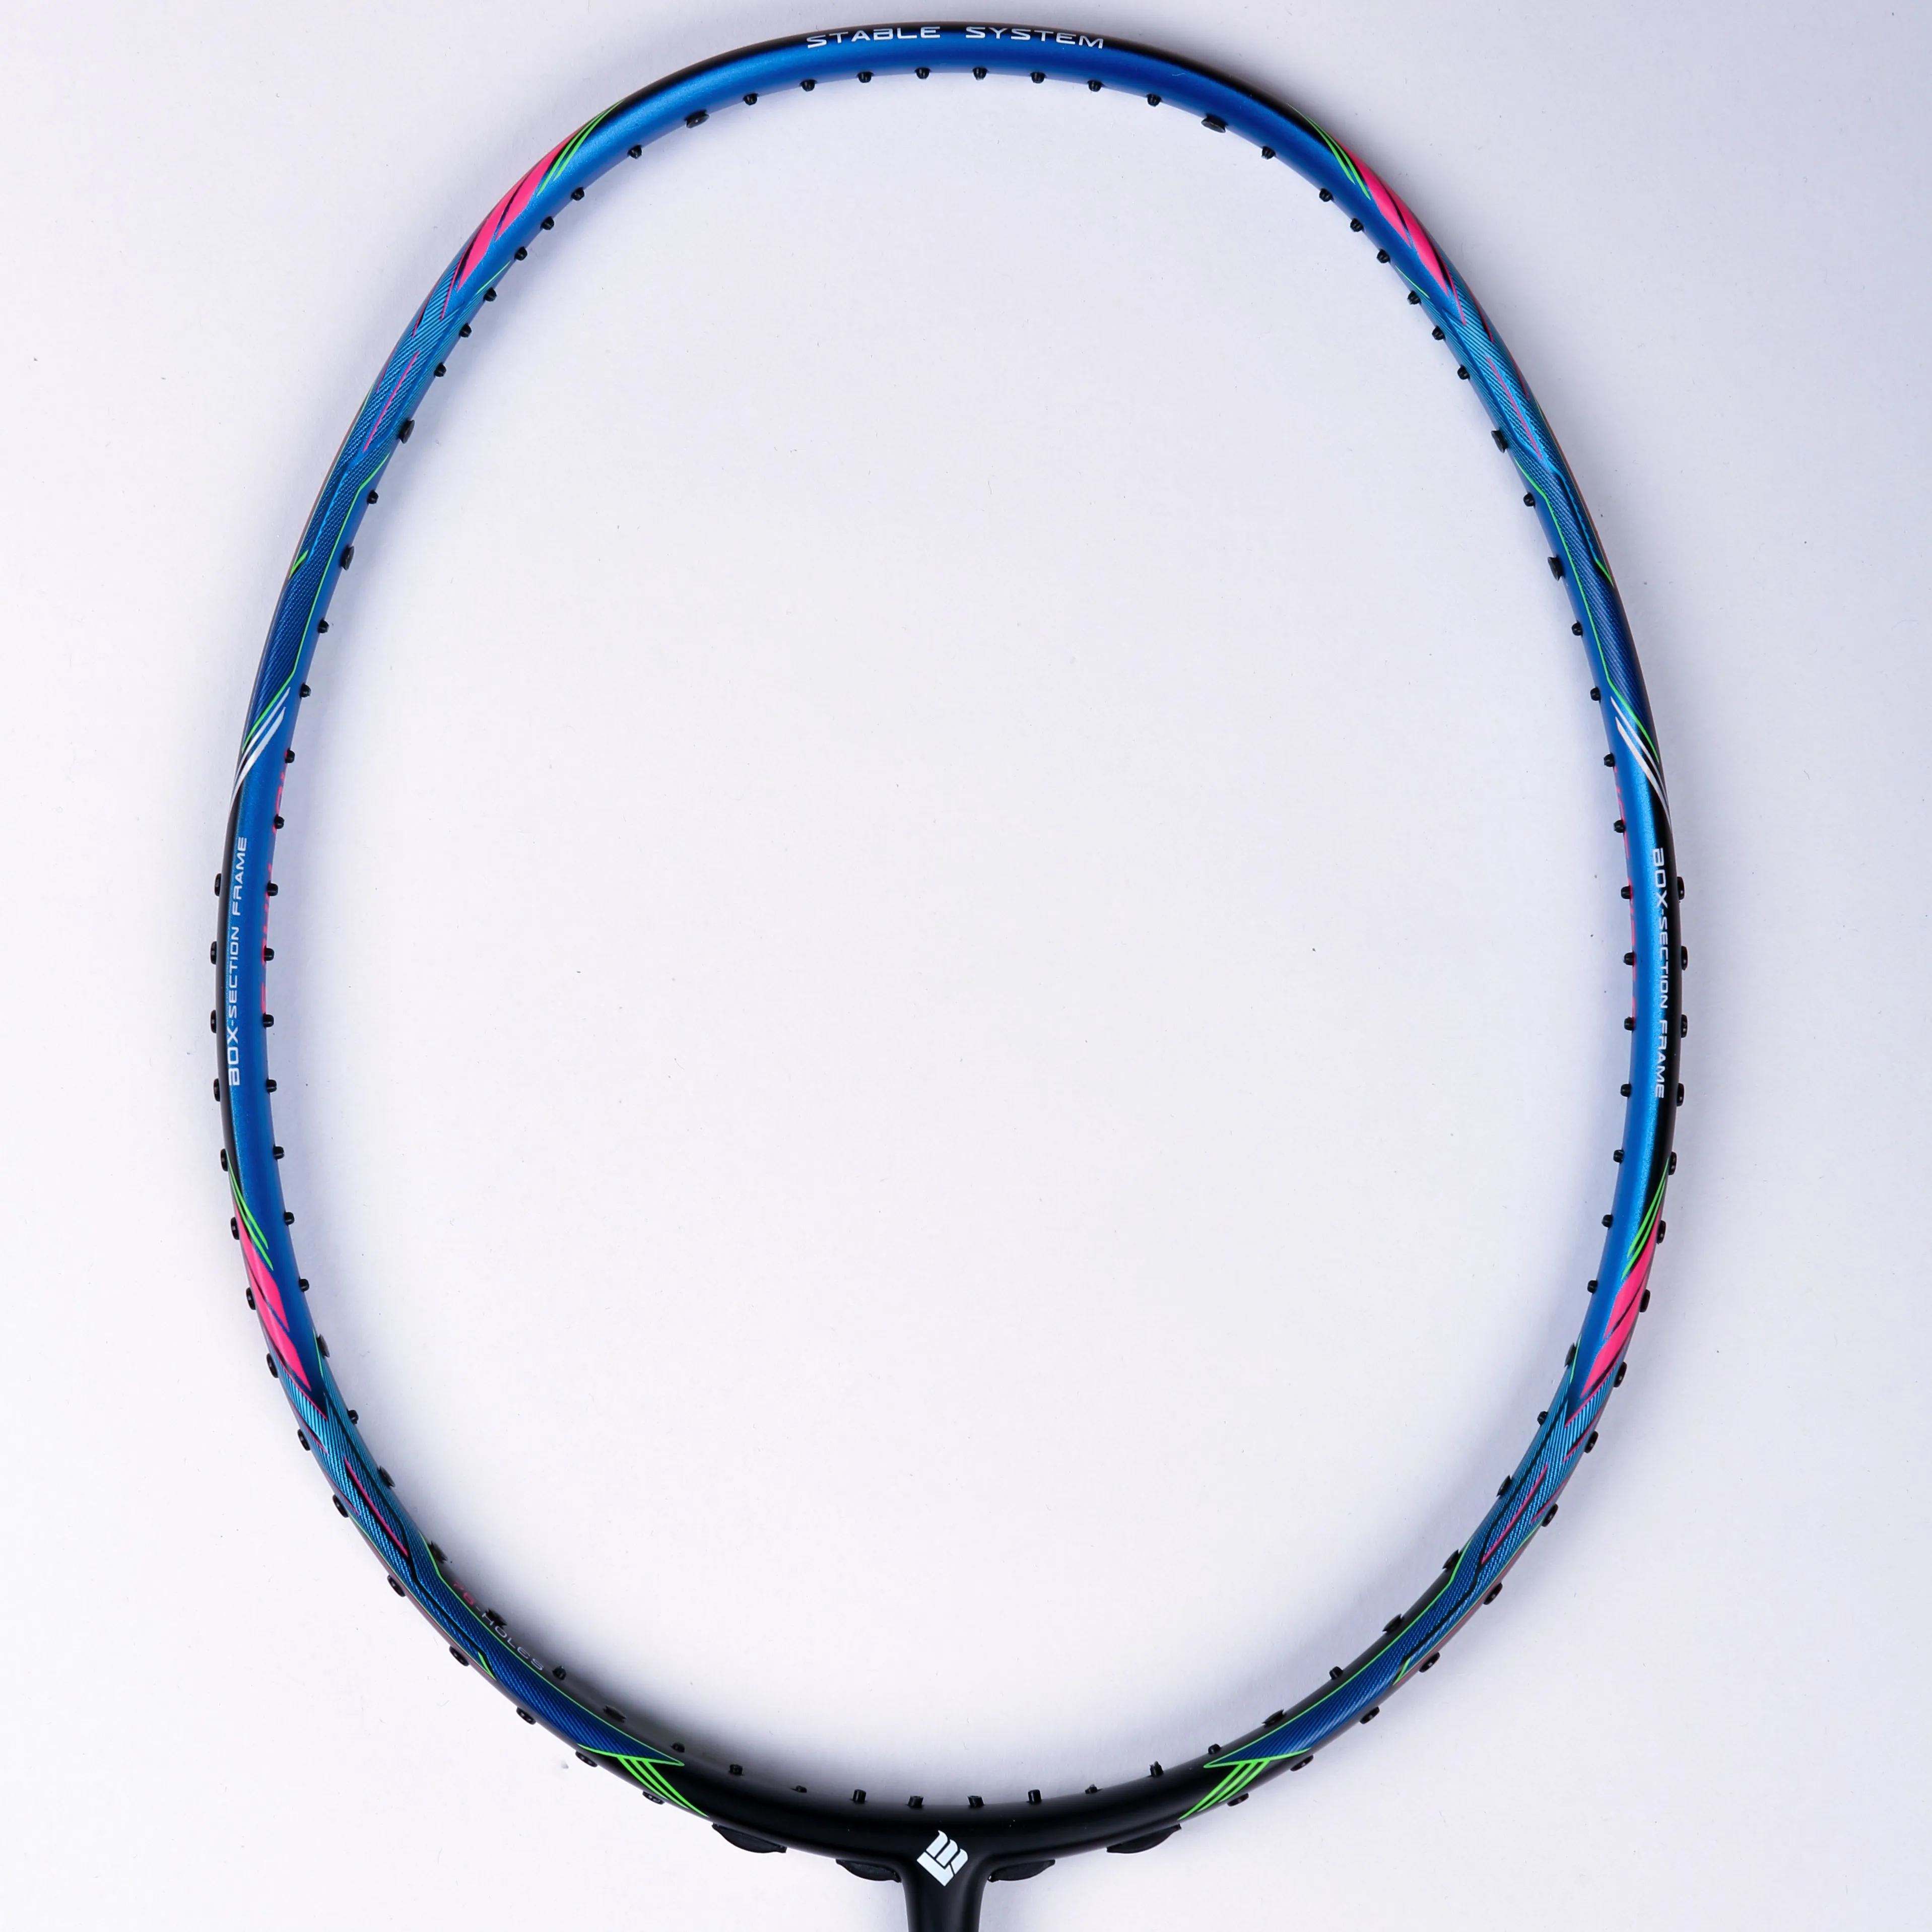 OEM design badminton racket H9 model